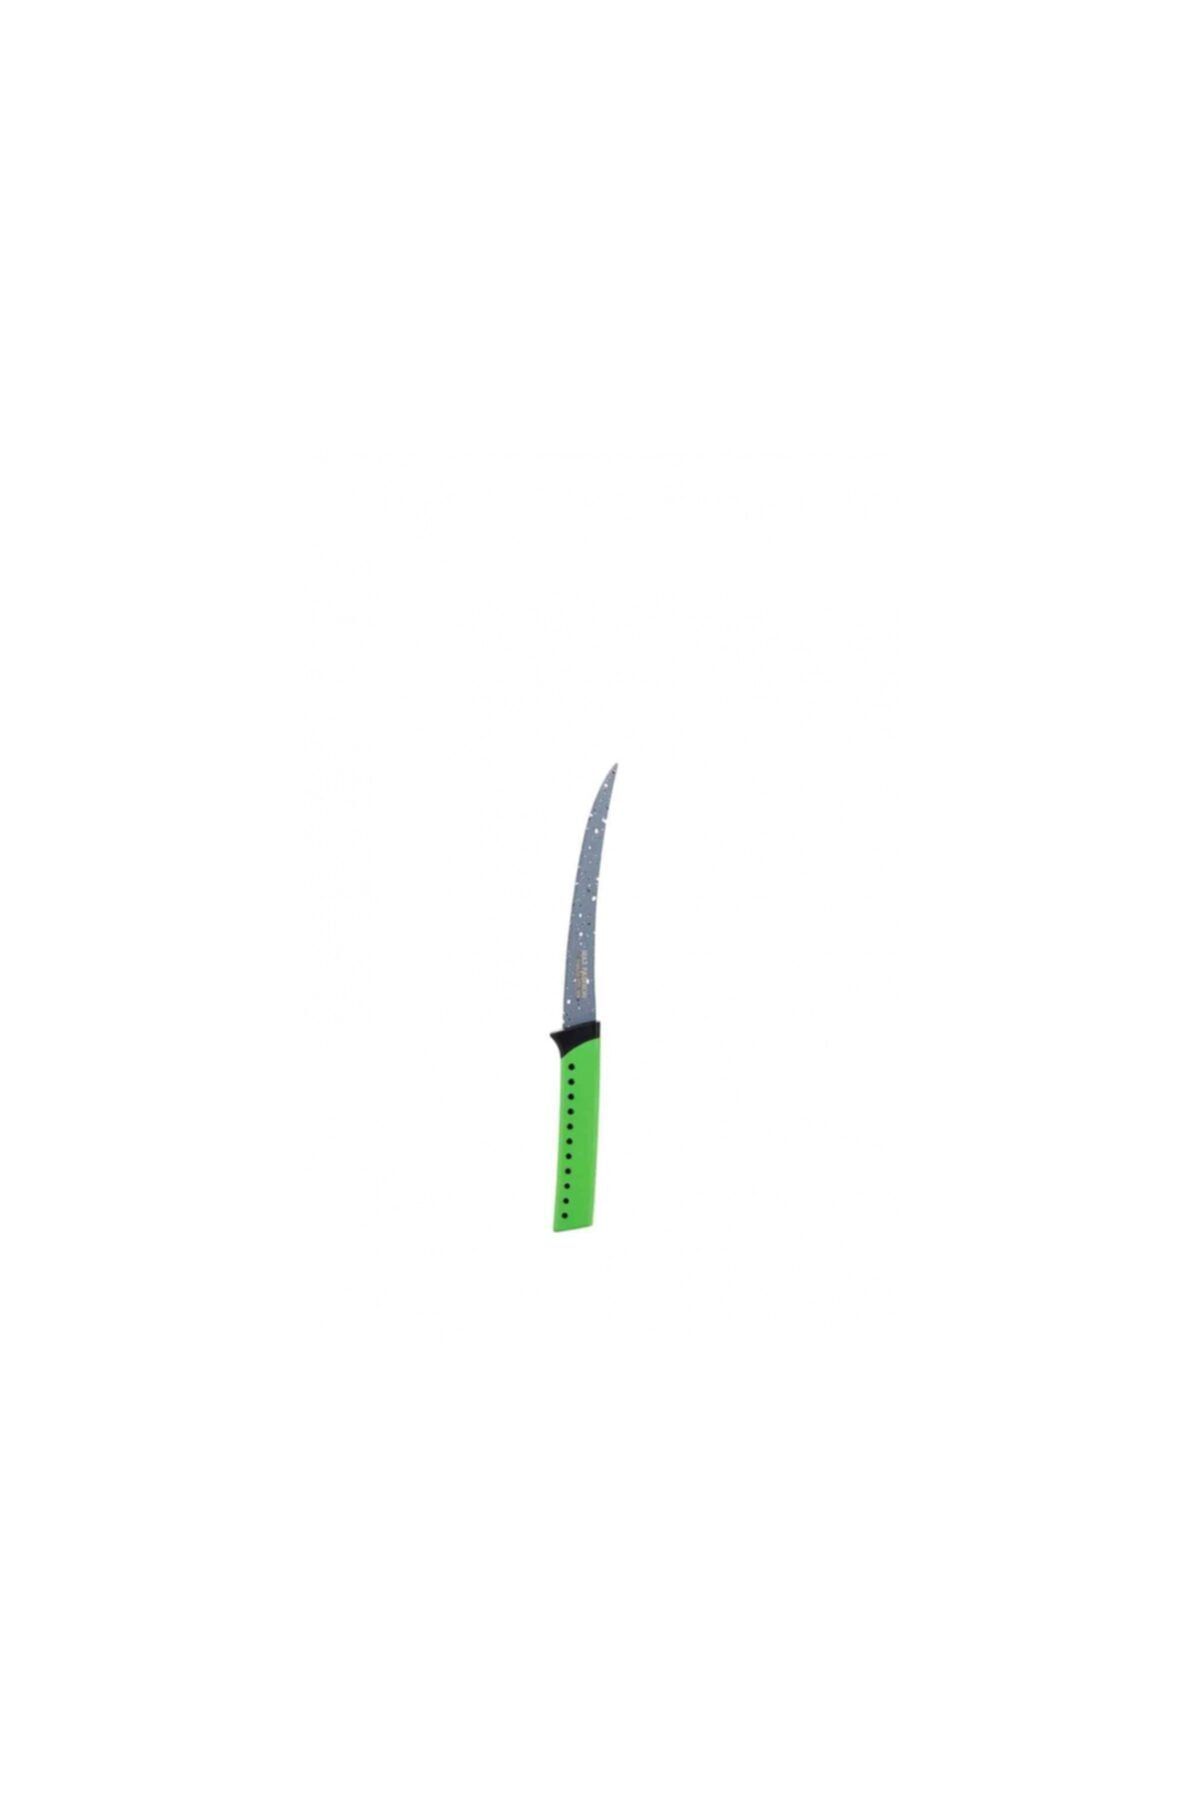 Taç 23 Cm Soyma Bıçağı Yeşil